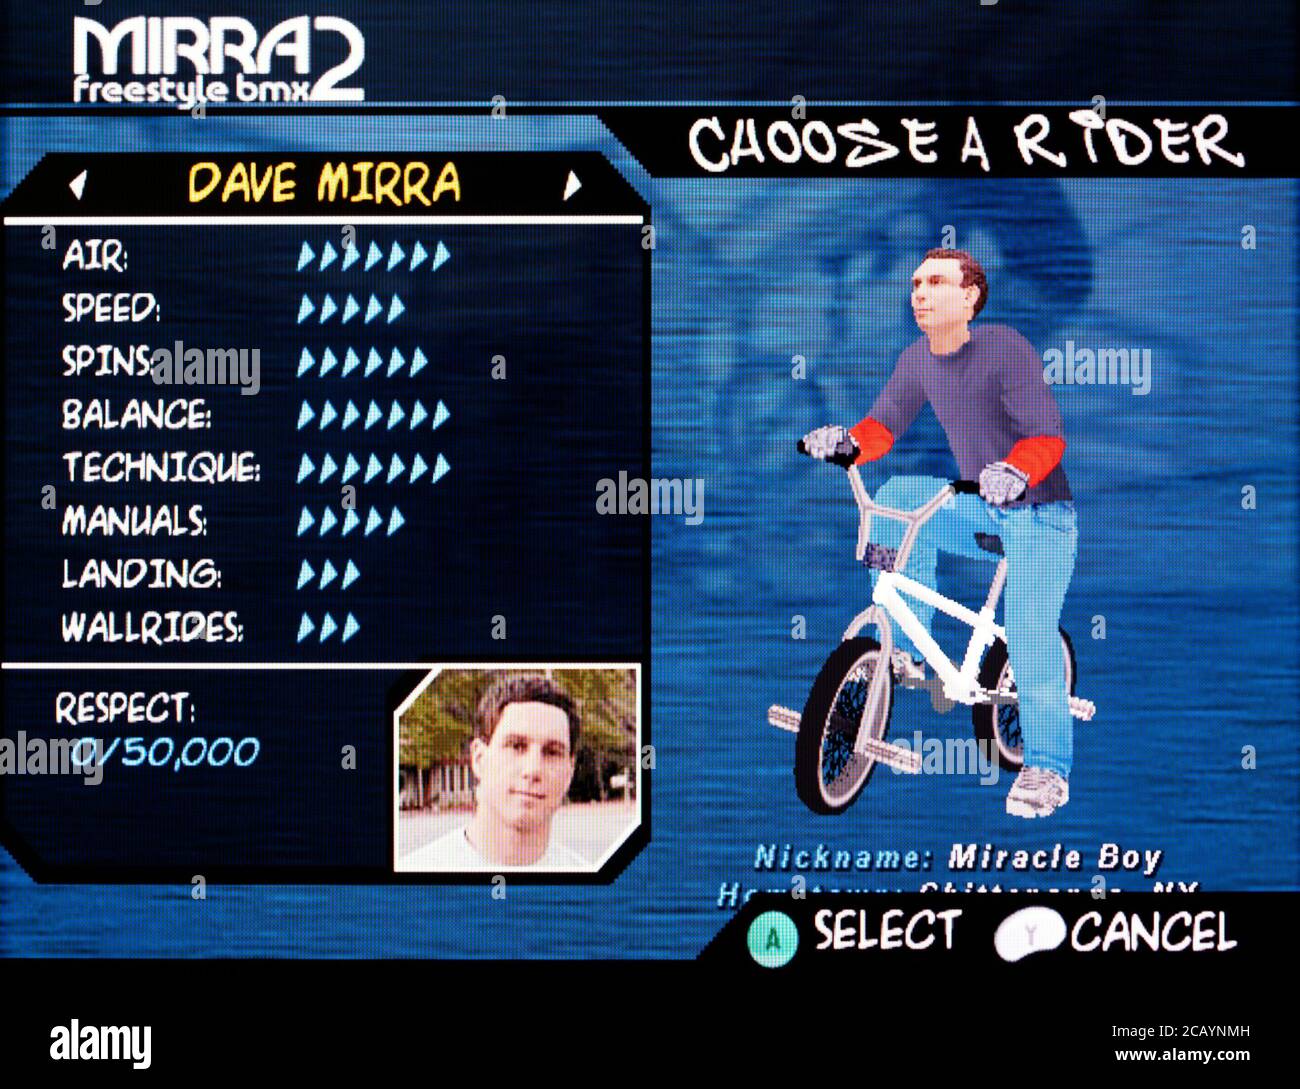 Dave Mirra Freestyle BMX 2 - Nintendo Gamecube Videogame - Editorial use  only Stock Photo - Alamy